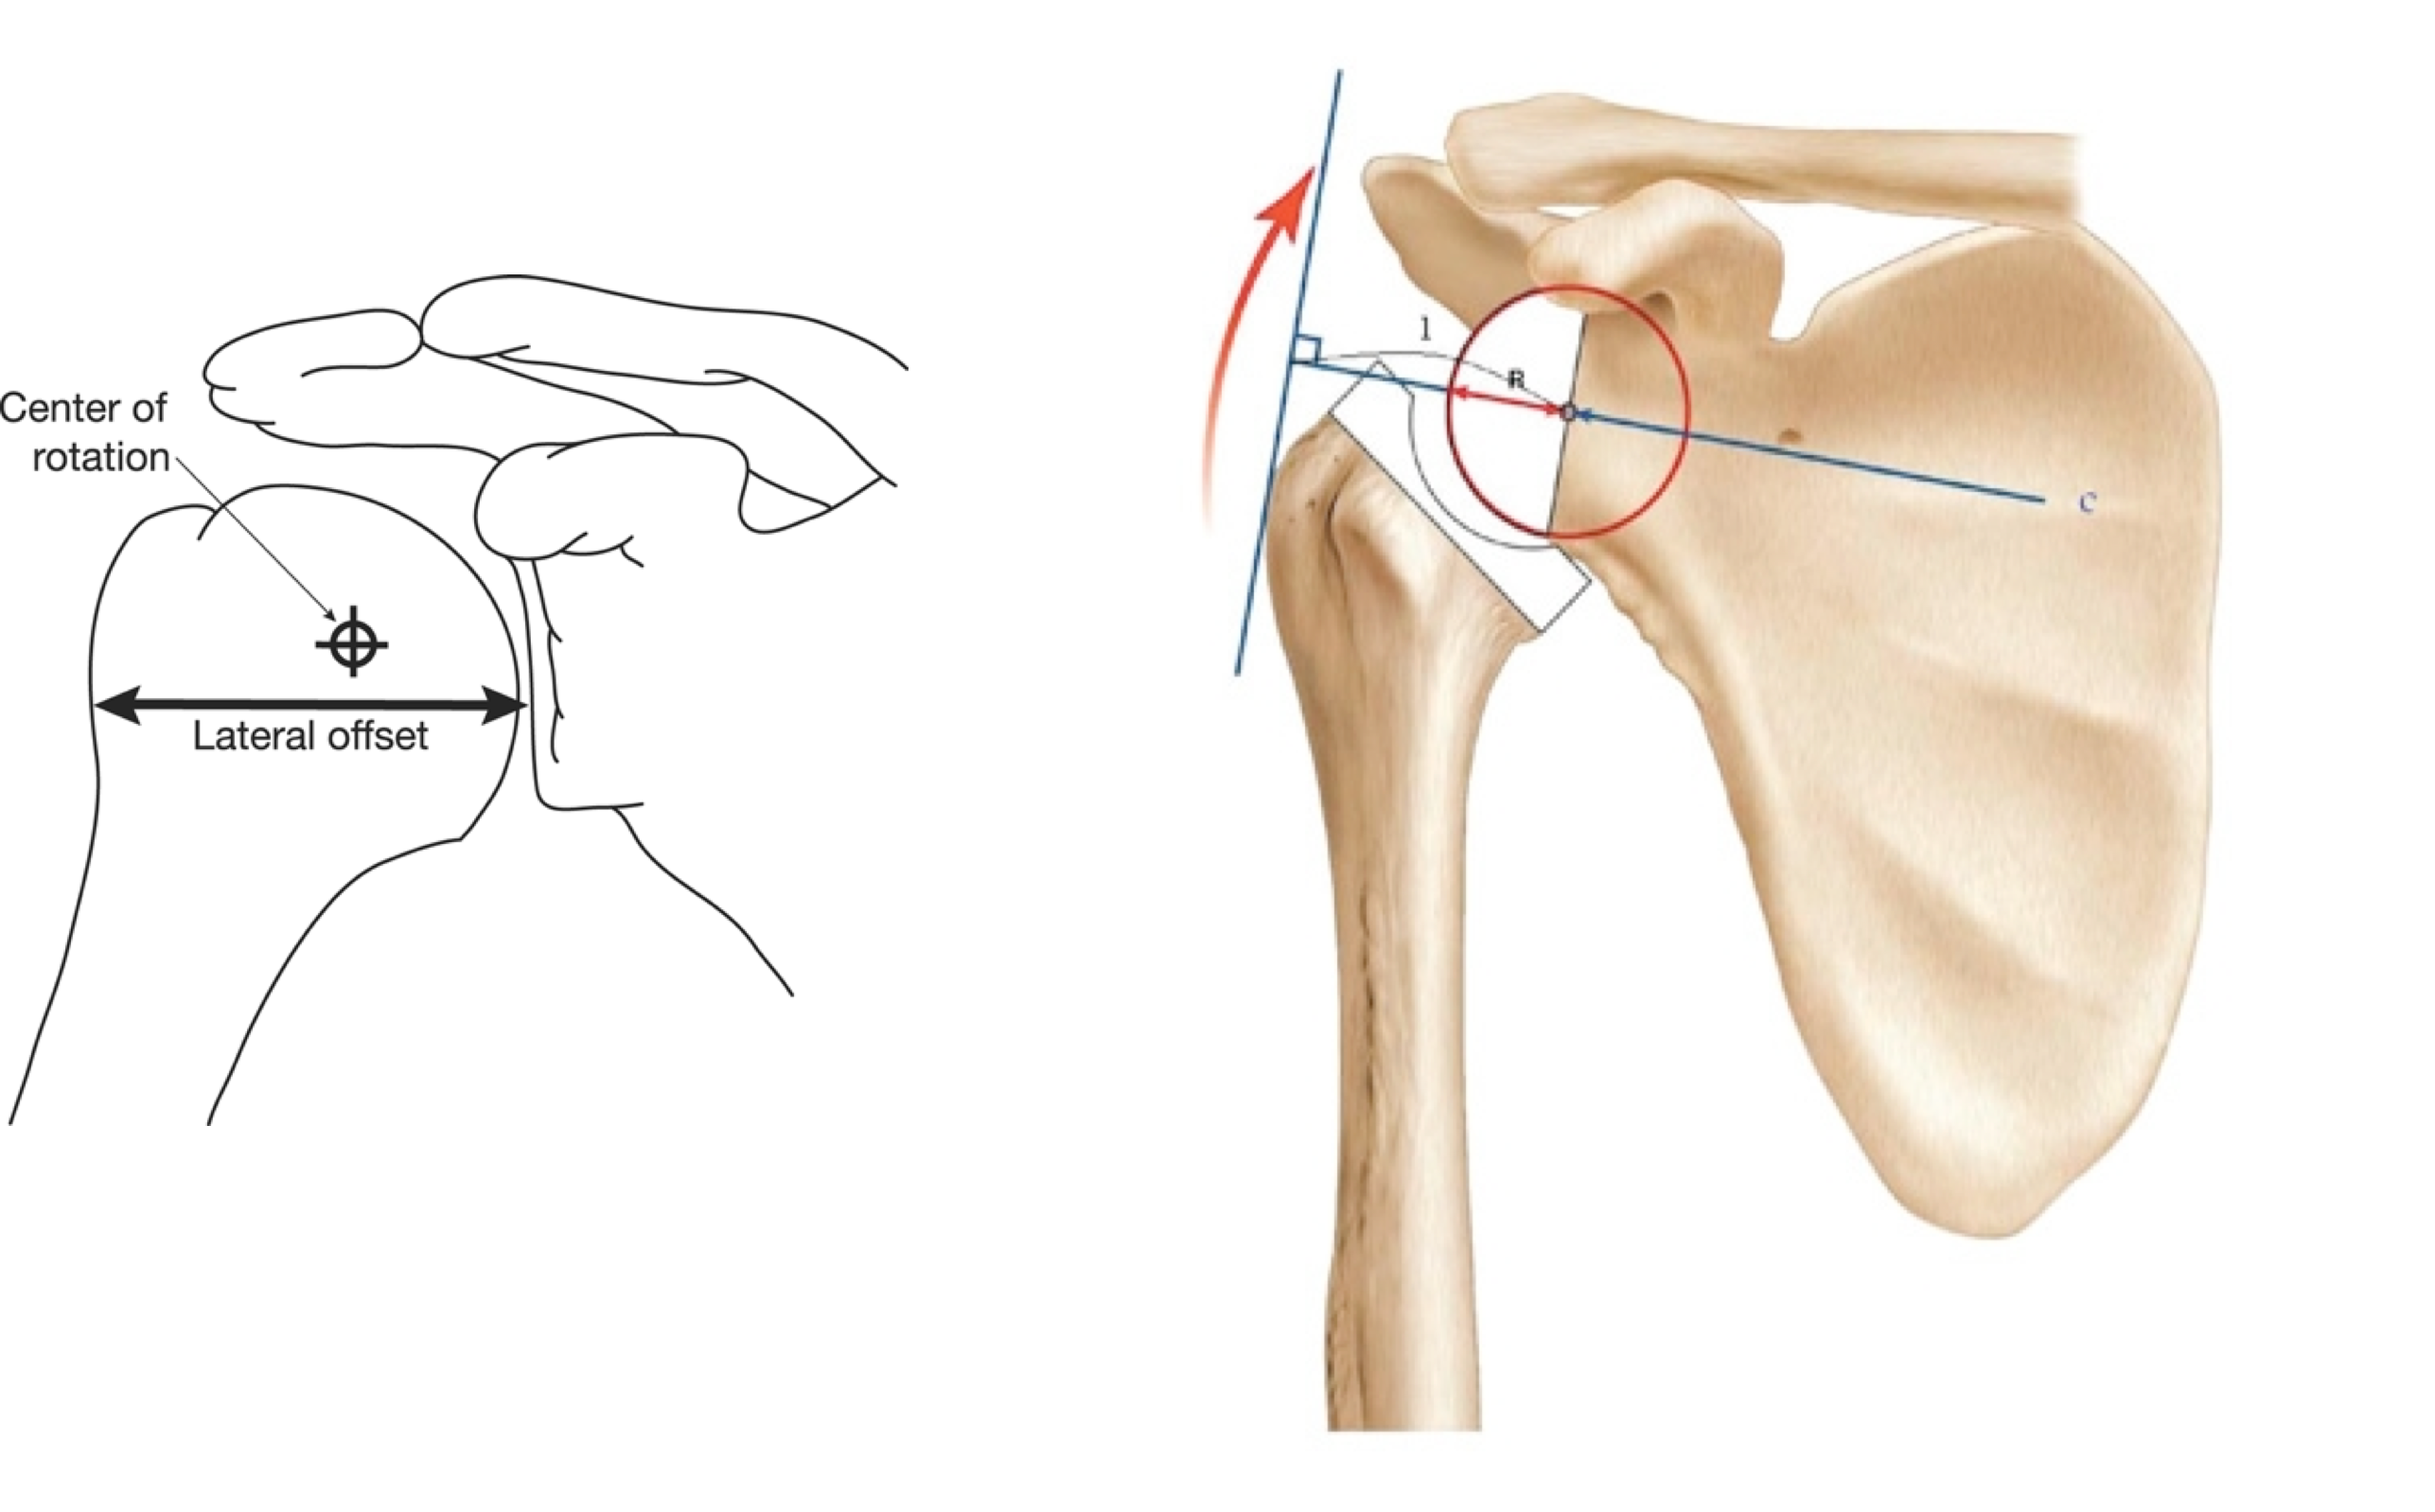 reverse-shoulder-arthroplasty-orthopaedicprinciples